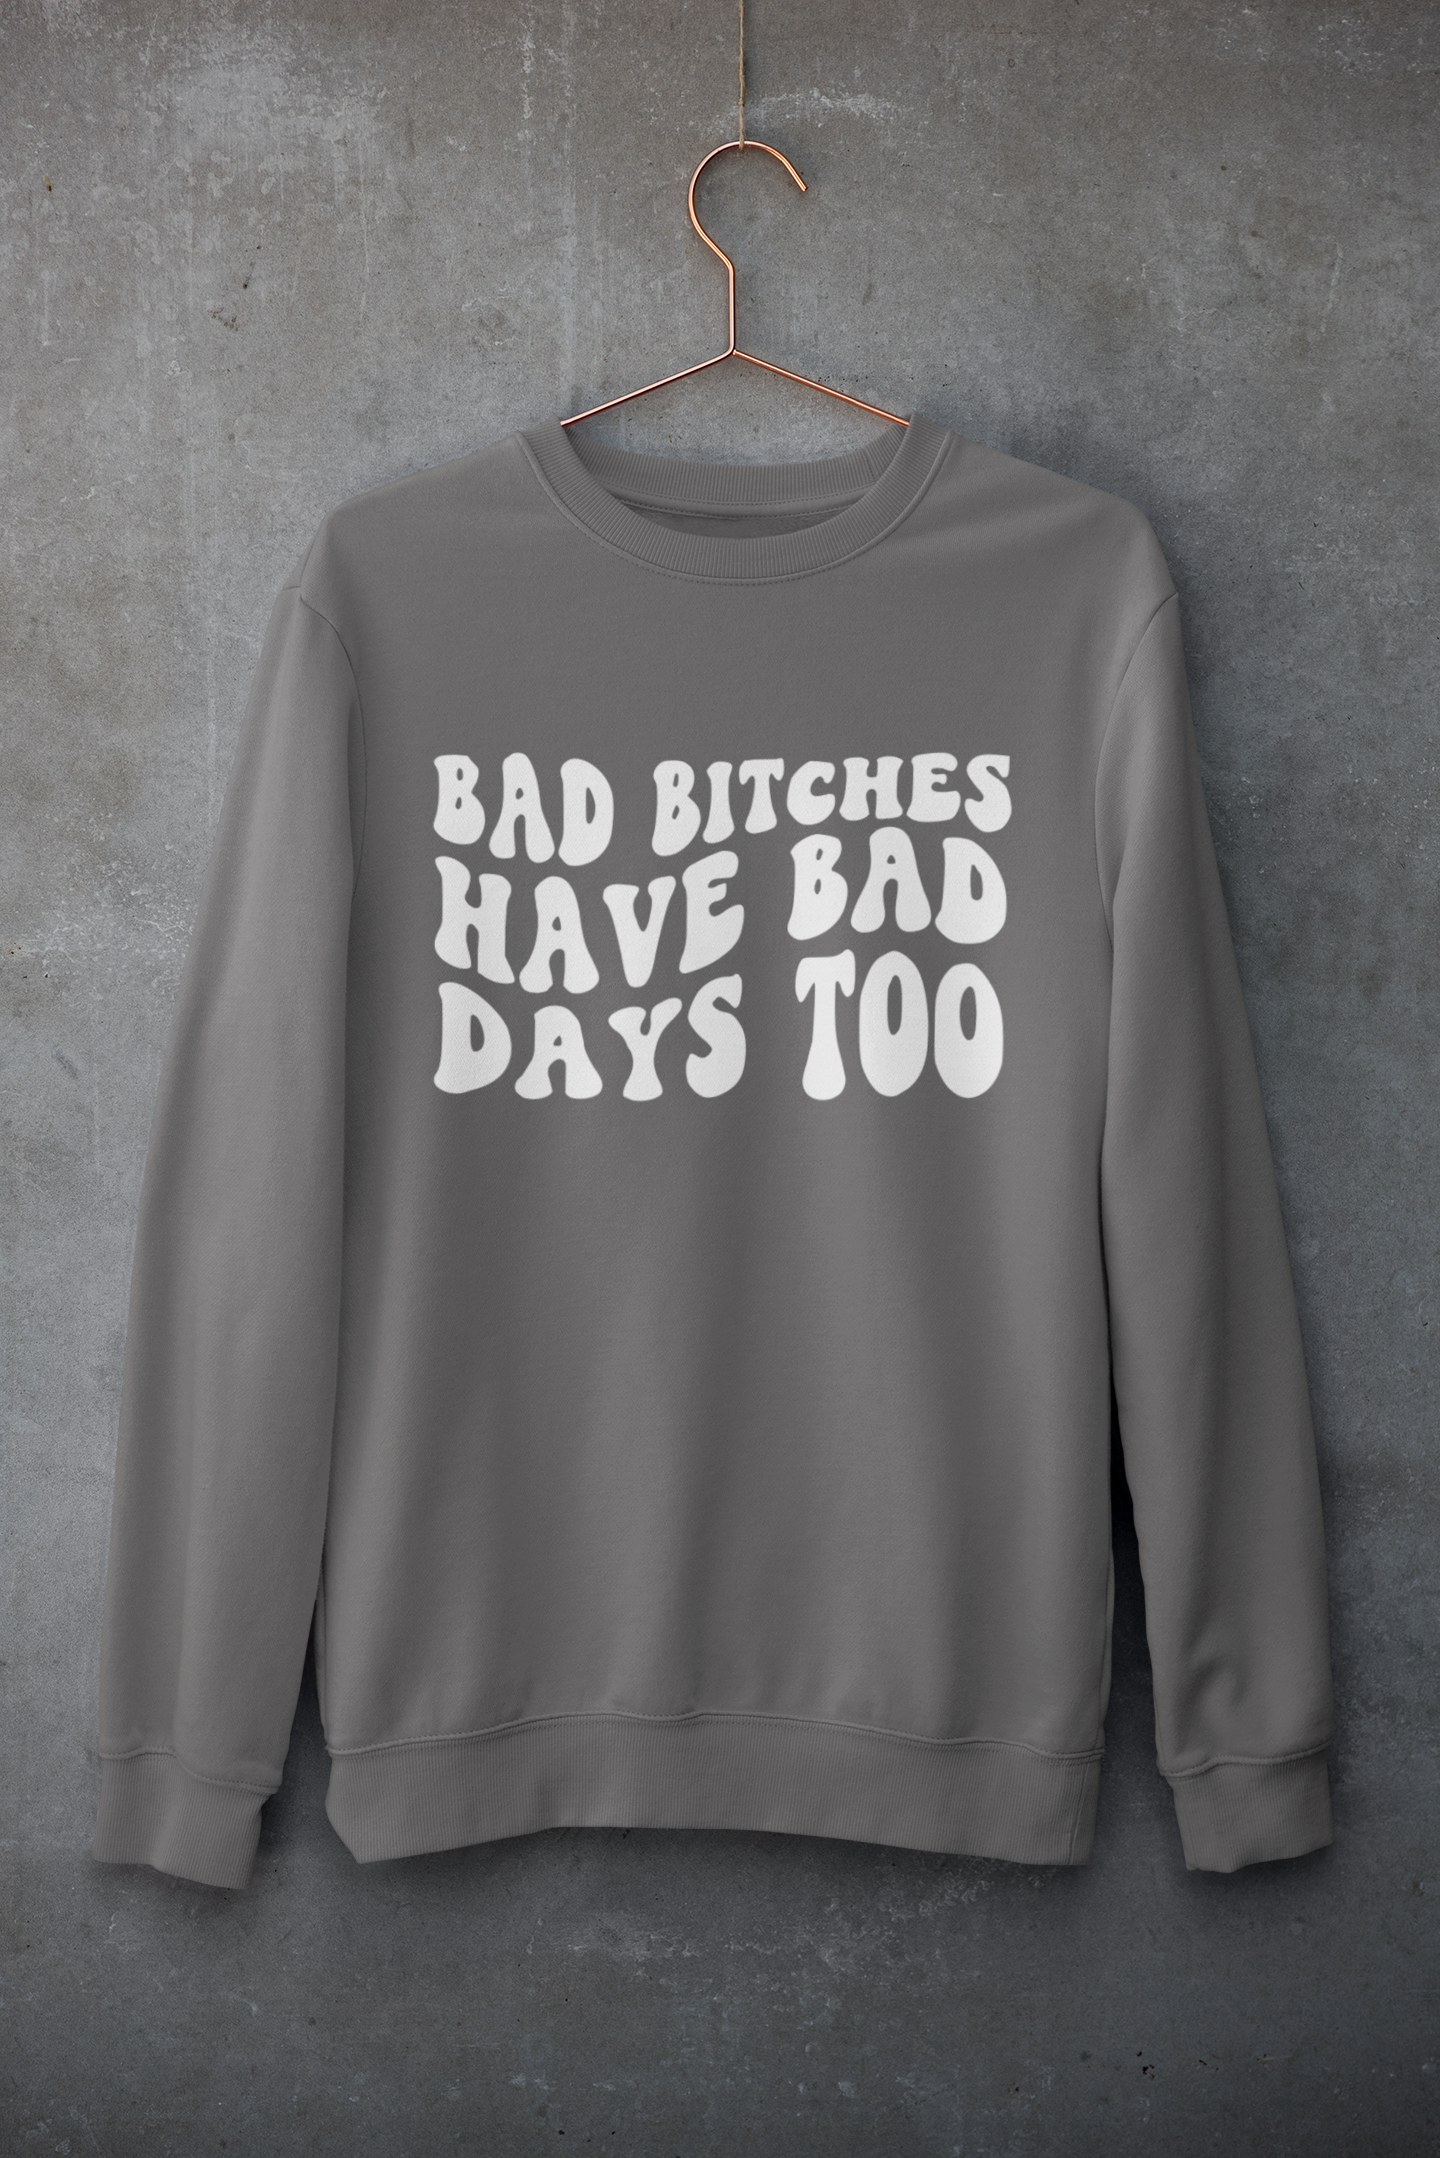 Bad B*tches have bad days too | Mental Health | Sweatshirt